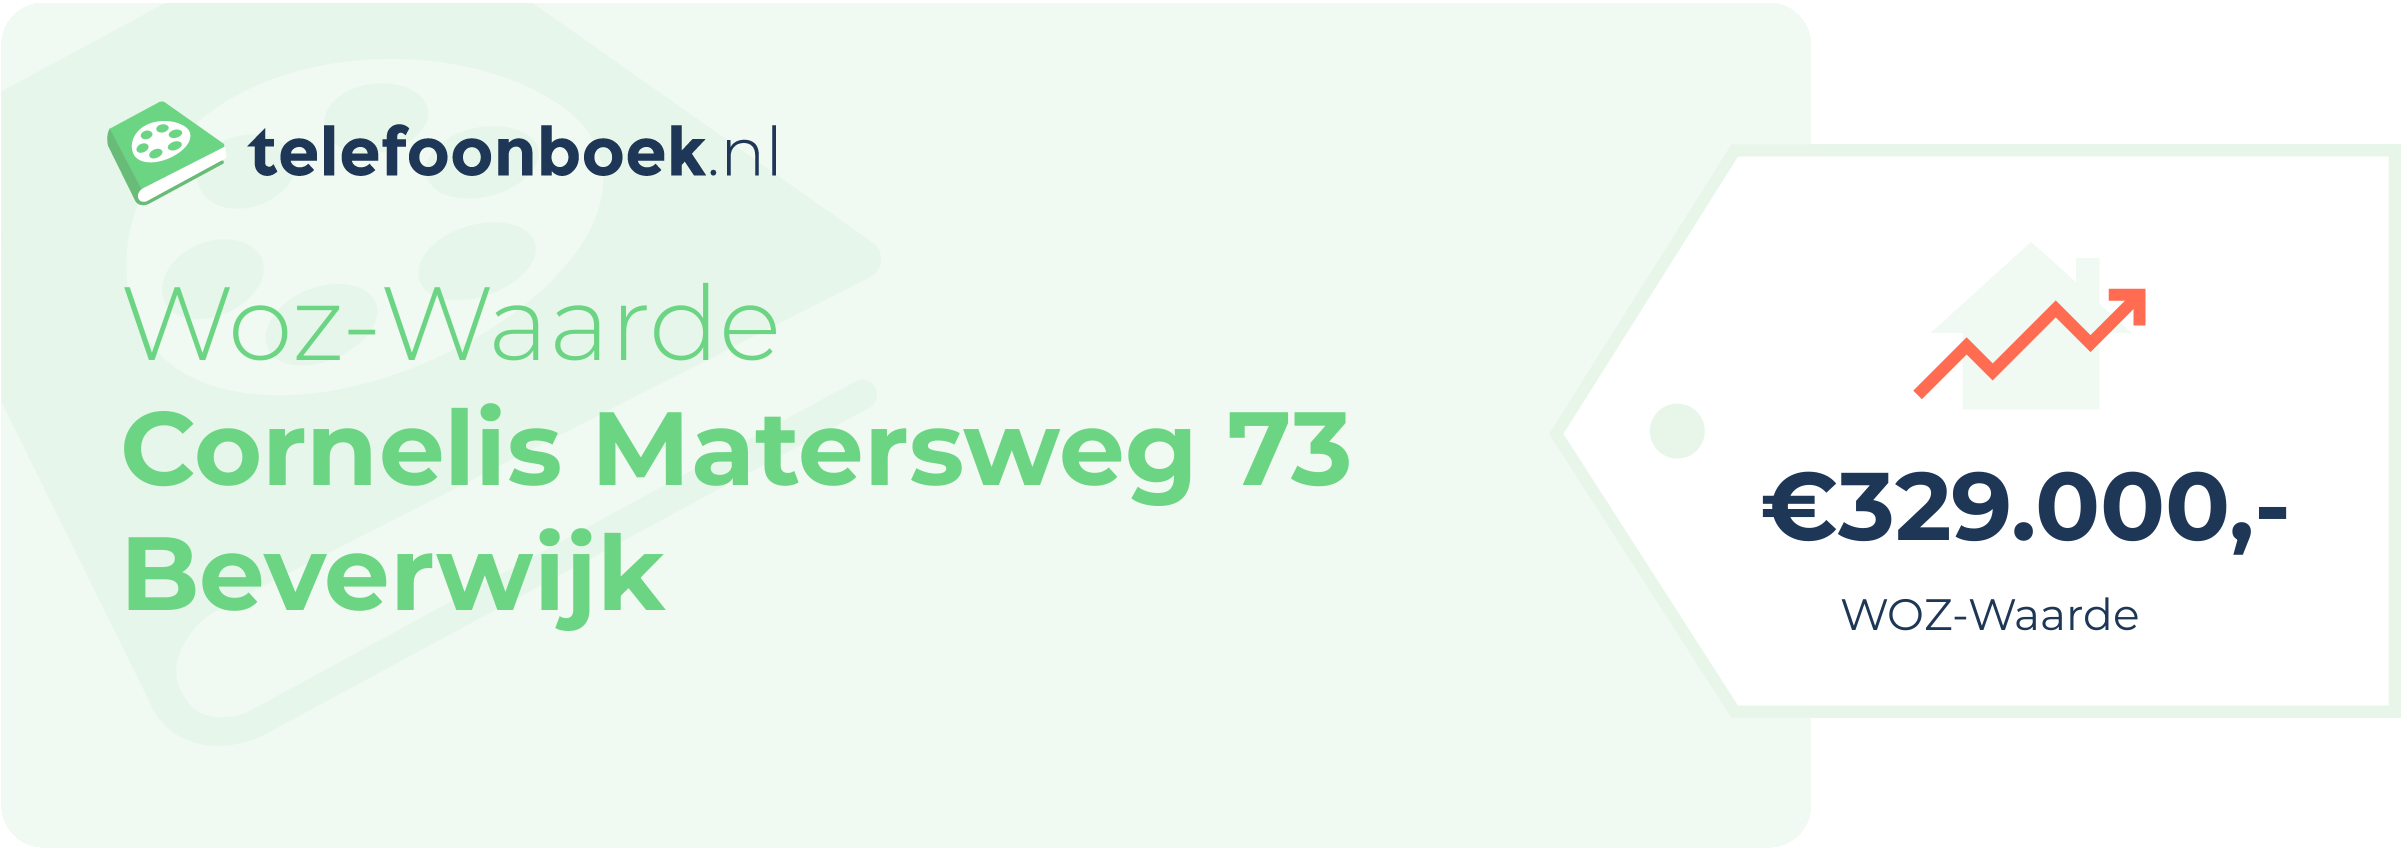 WOZ-waarde Cornelis Matersweg 73 Beverwijk